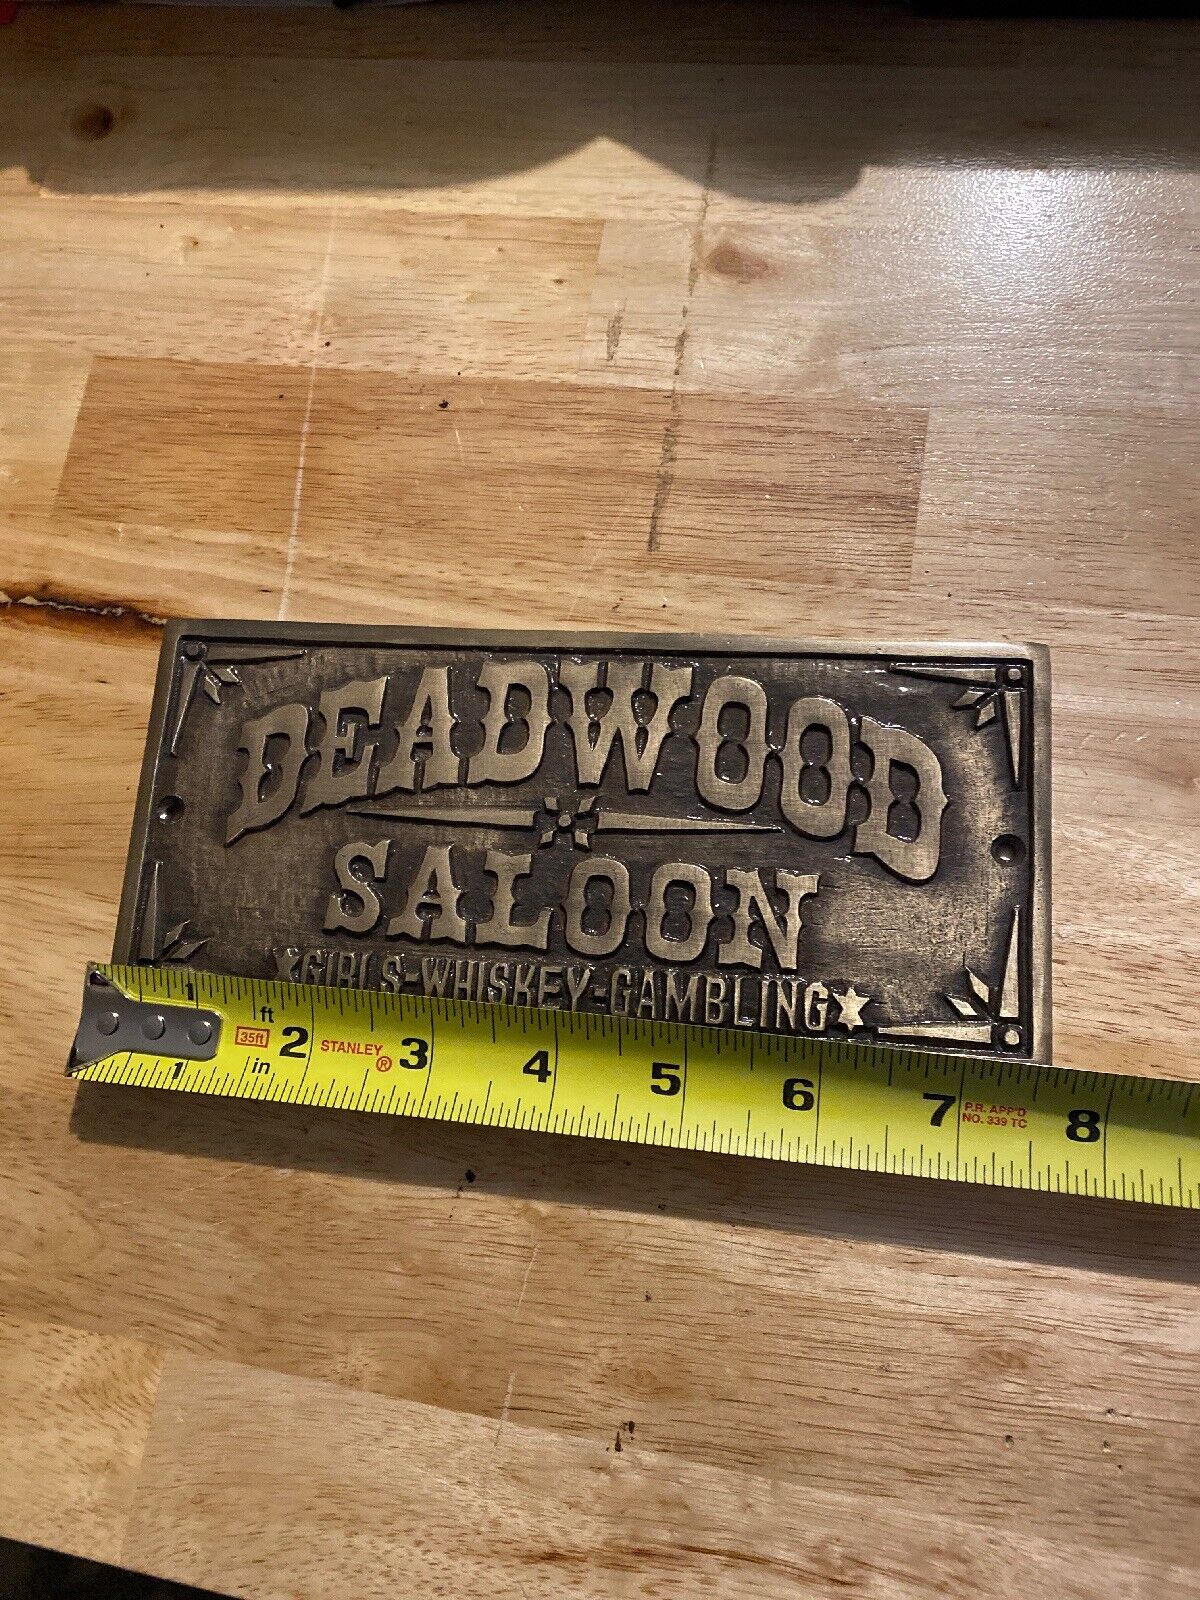 Deadwood Saloon Sign South Dakota Territory Metal Plaque GIRLS WHISKEY GAMBLING